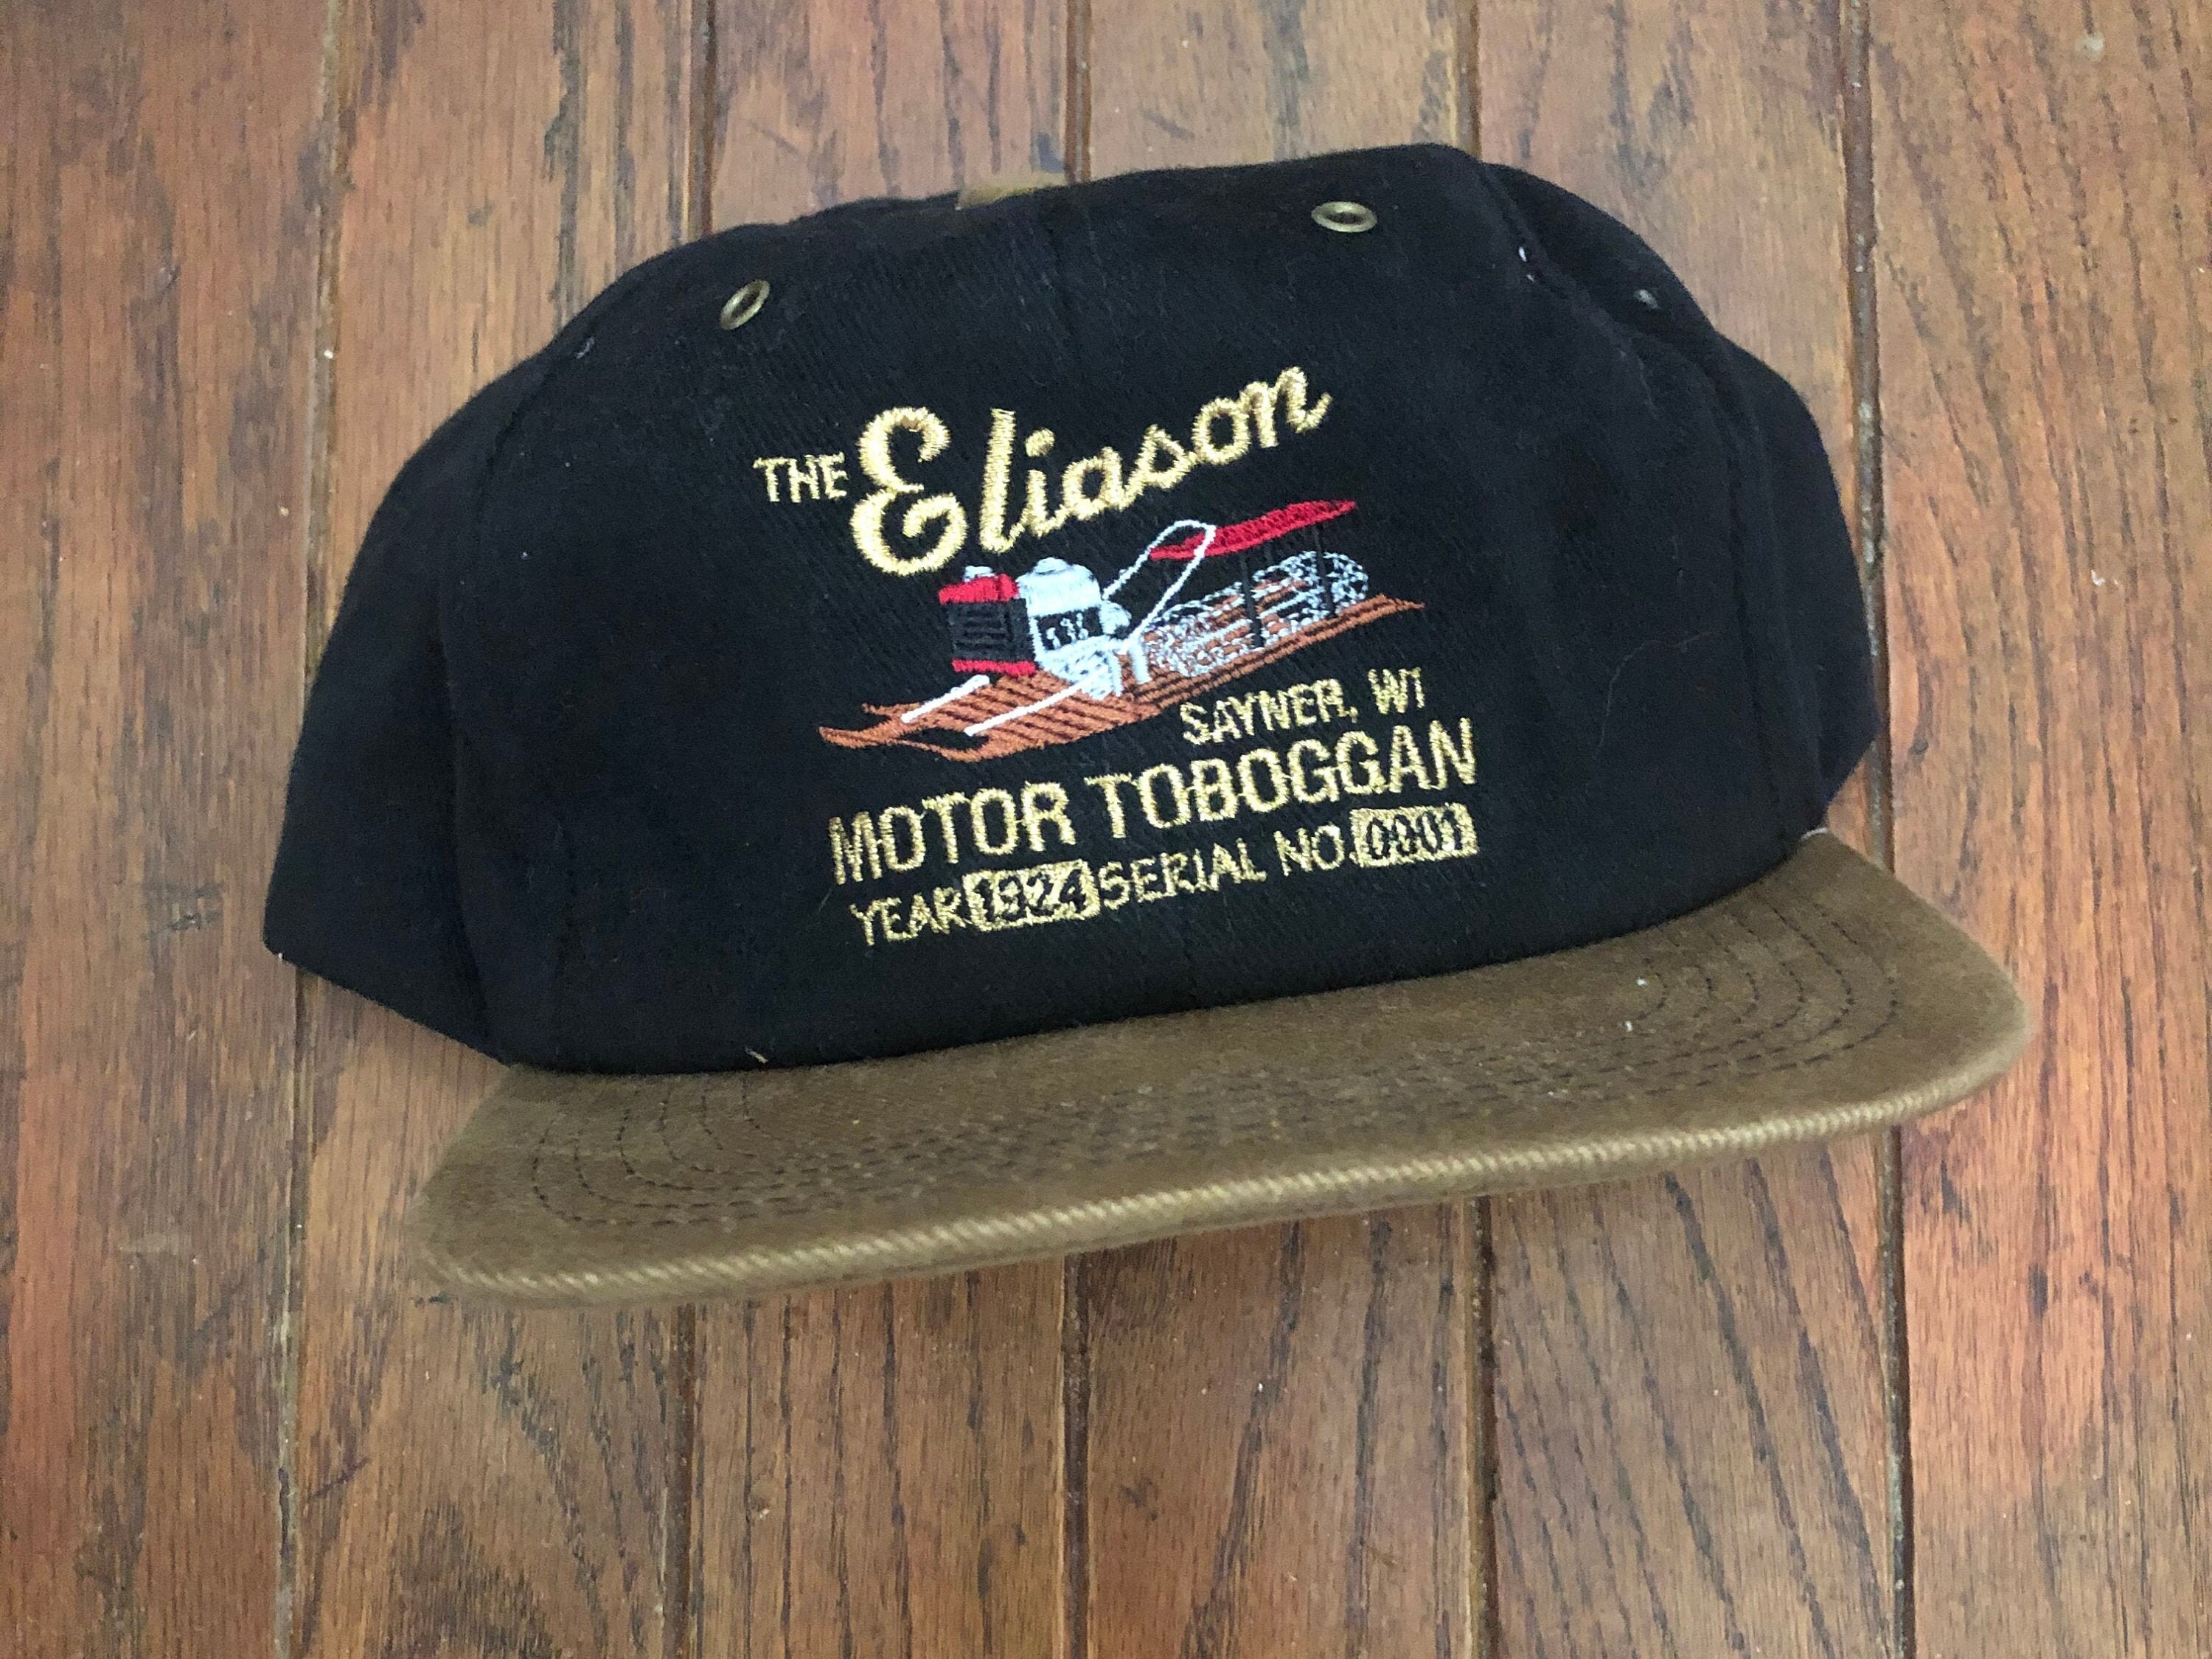 Vintage Eliason Snowmobiles Motor Toboggan Commemorative Tribute Coffee/Beer Can 